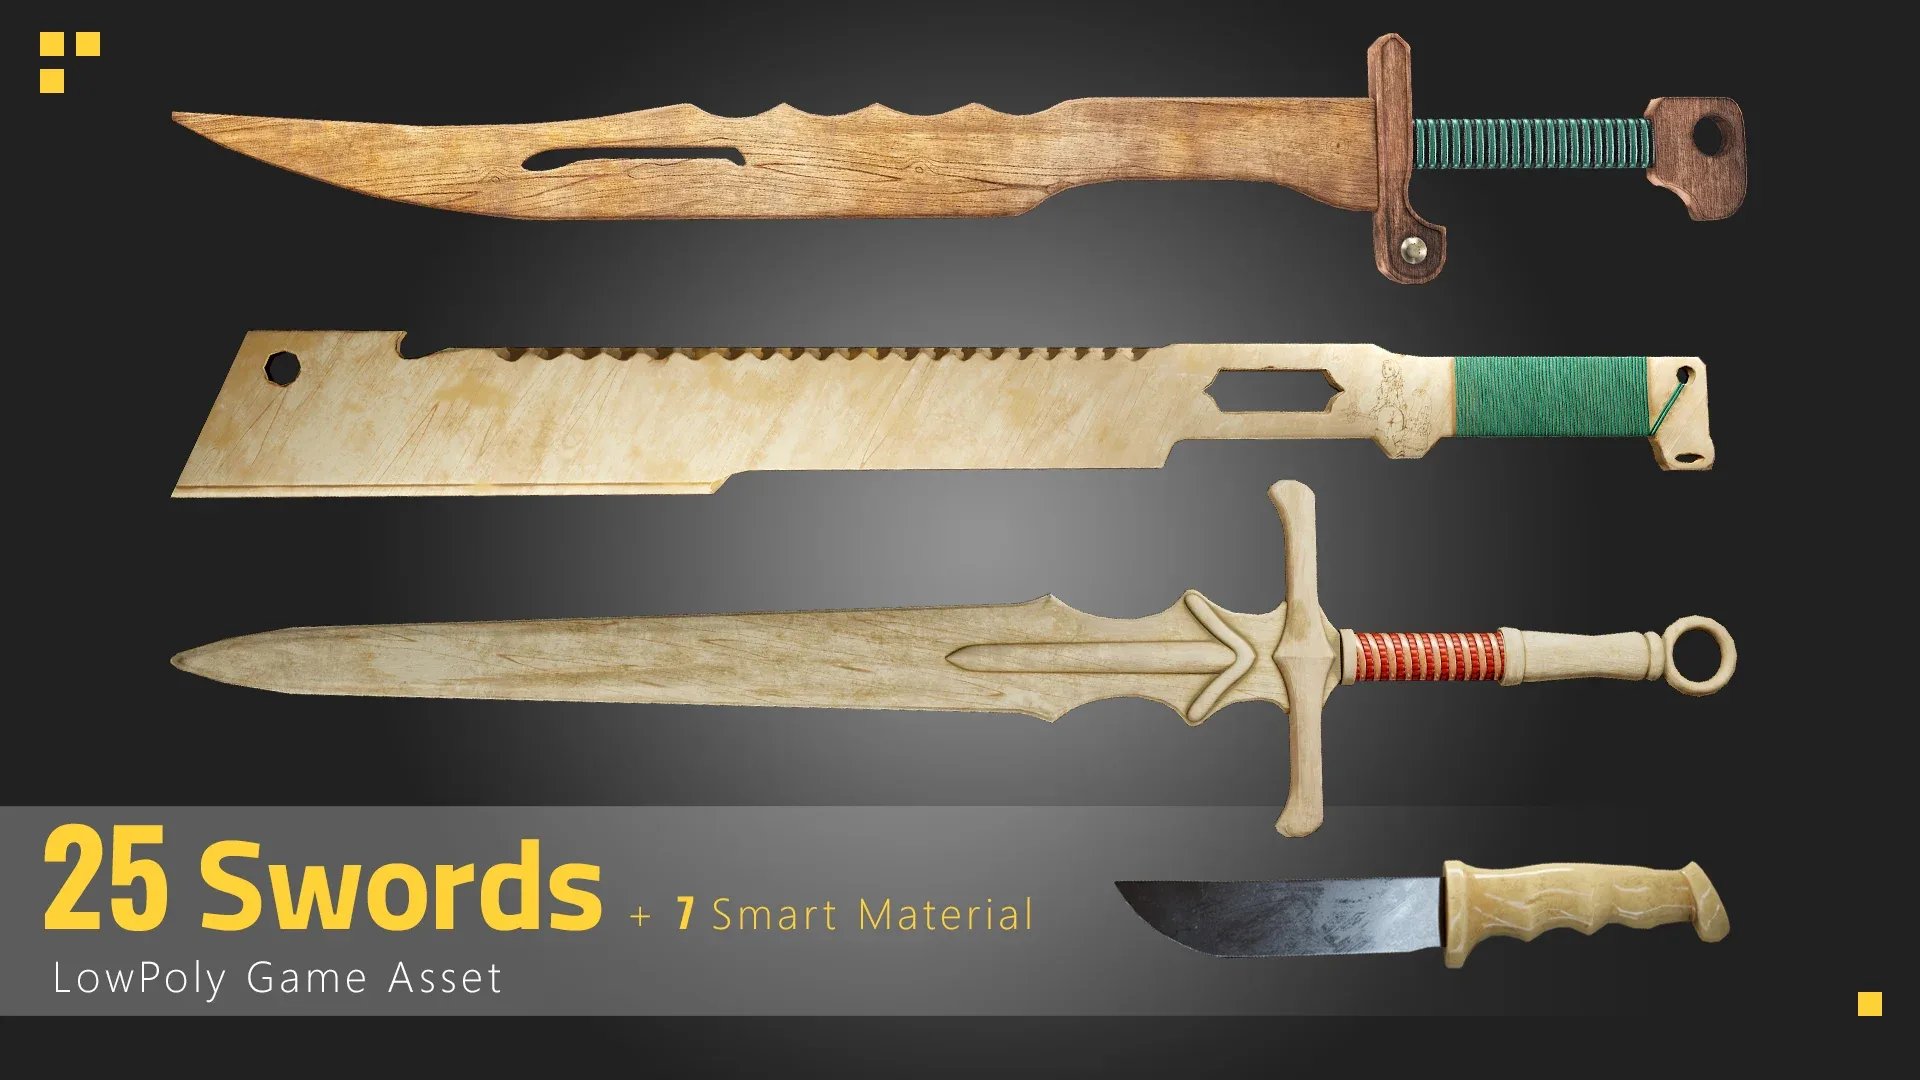 25 Sword Game Asset + 7 Free Smart Material